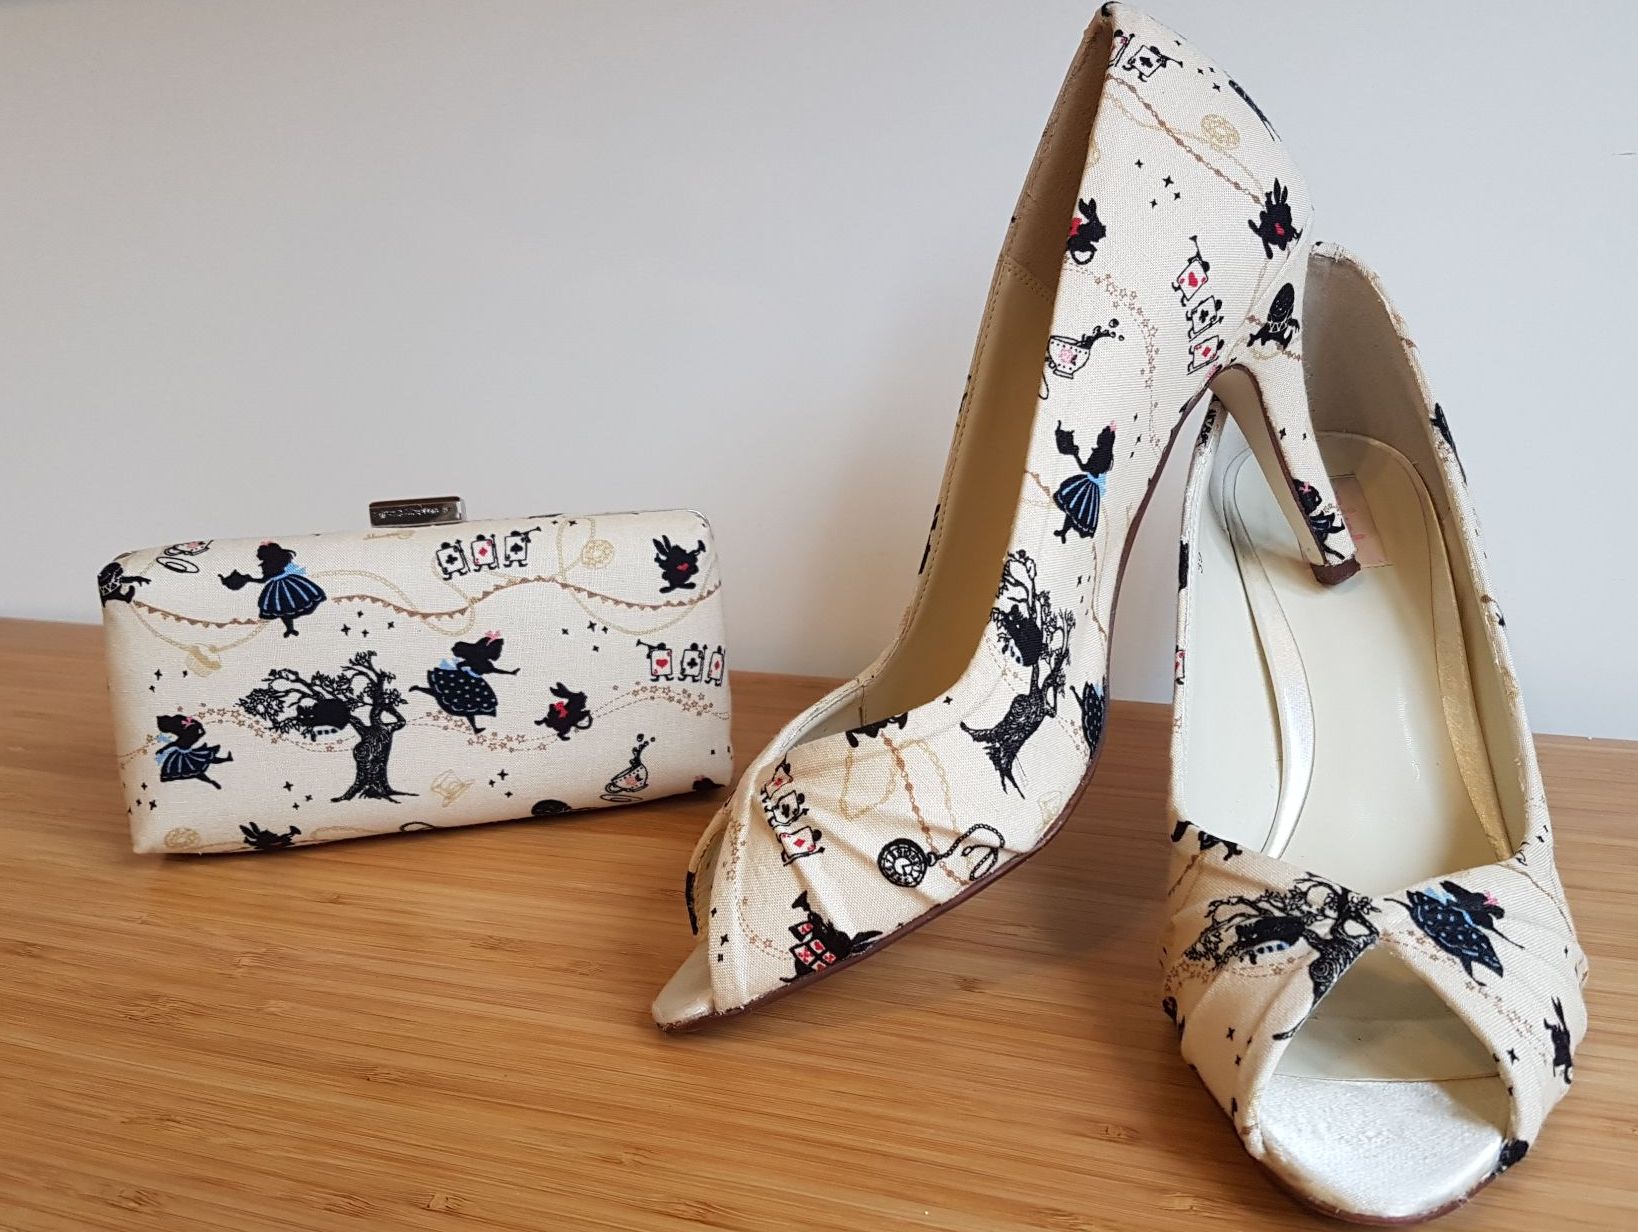 Alice in wonderland shoes & matching bag